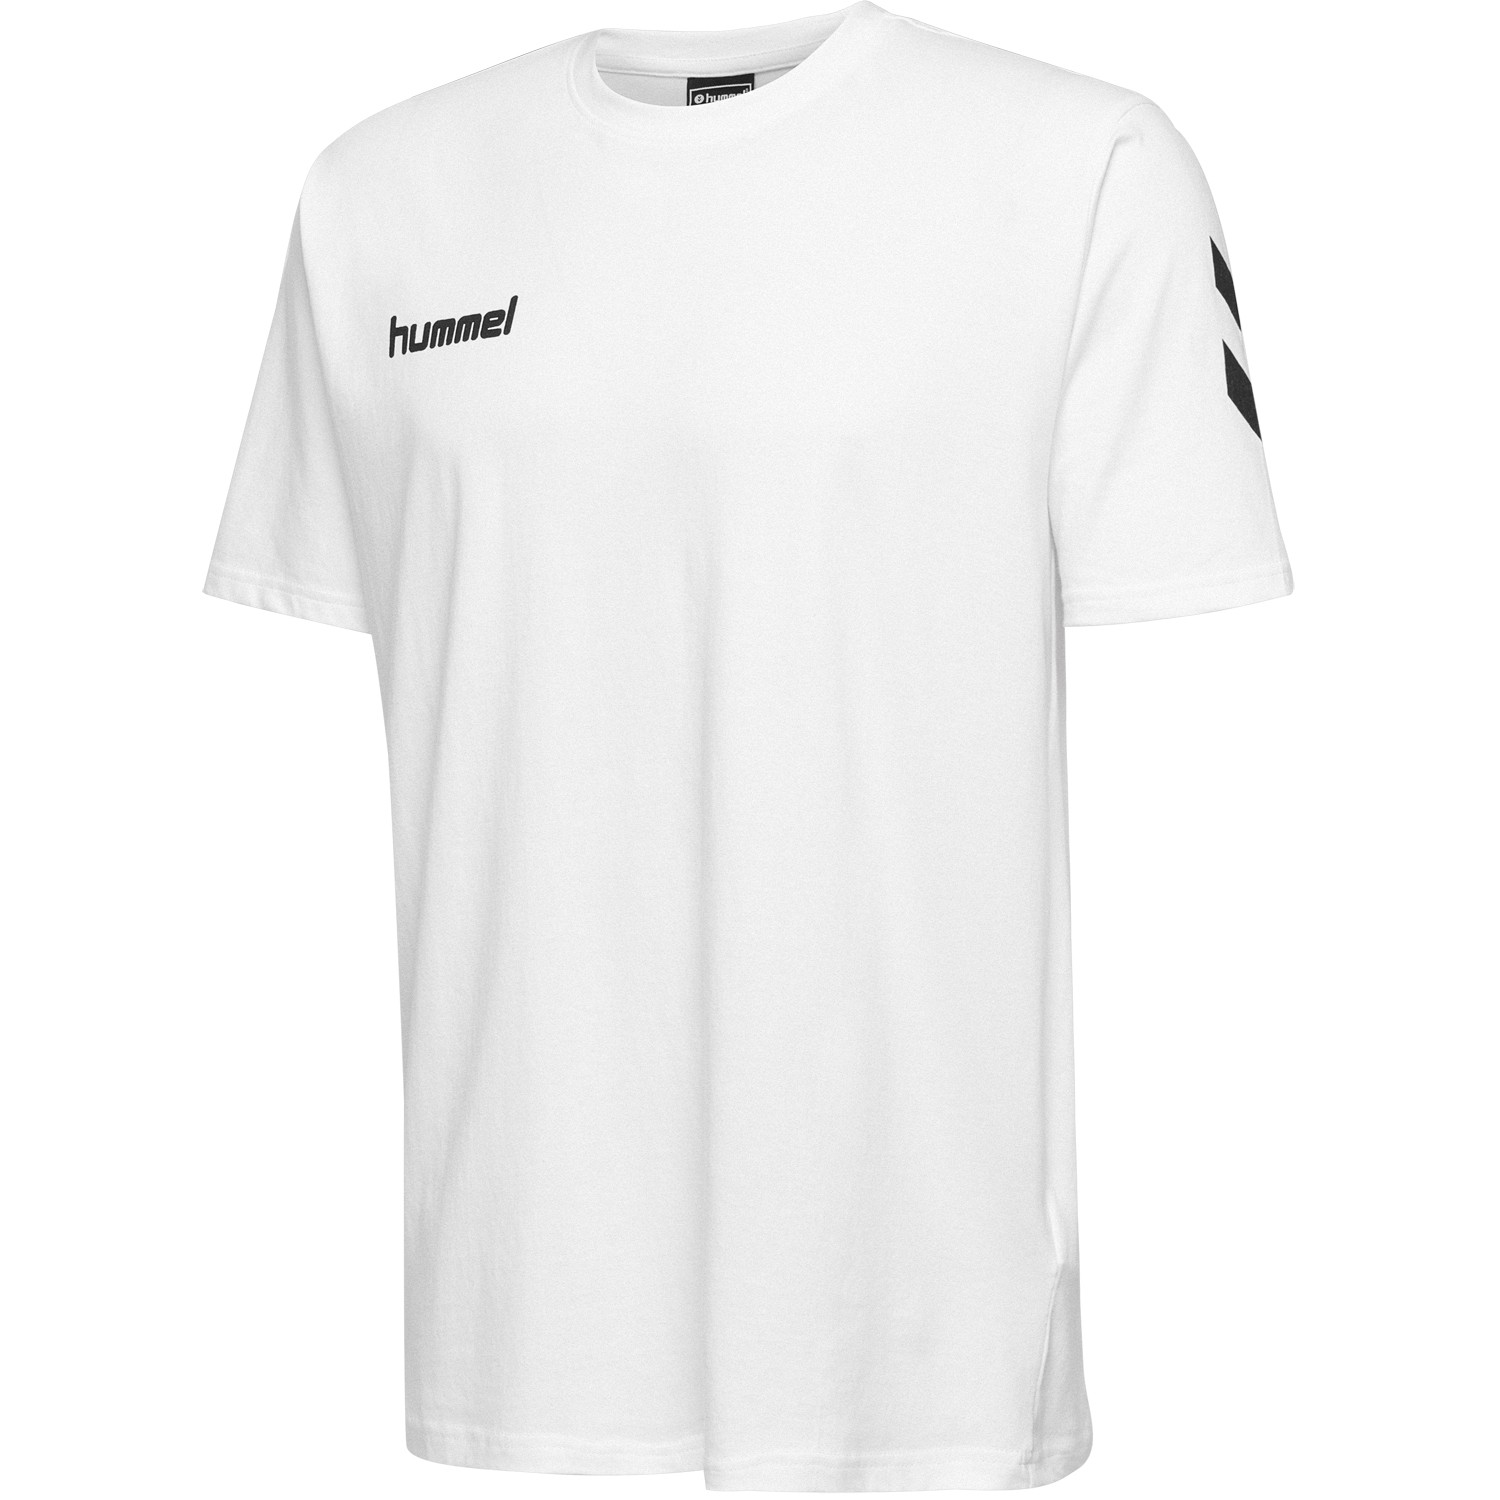 Hummel T-Shirts kaufen T-Shirts - Hummel online